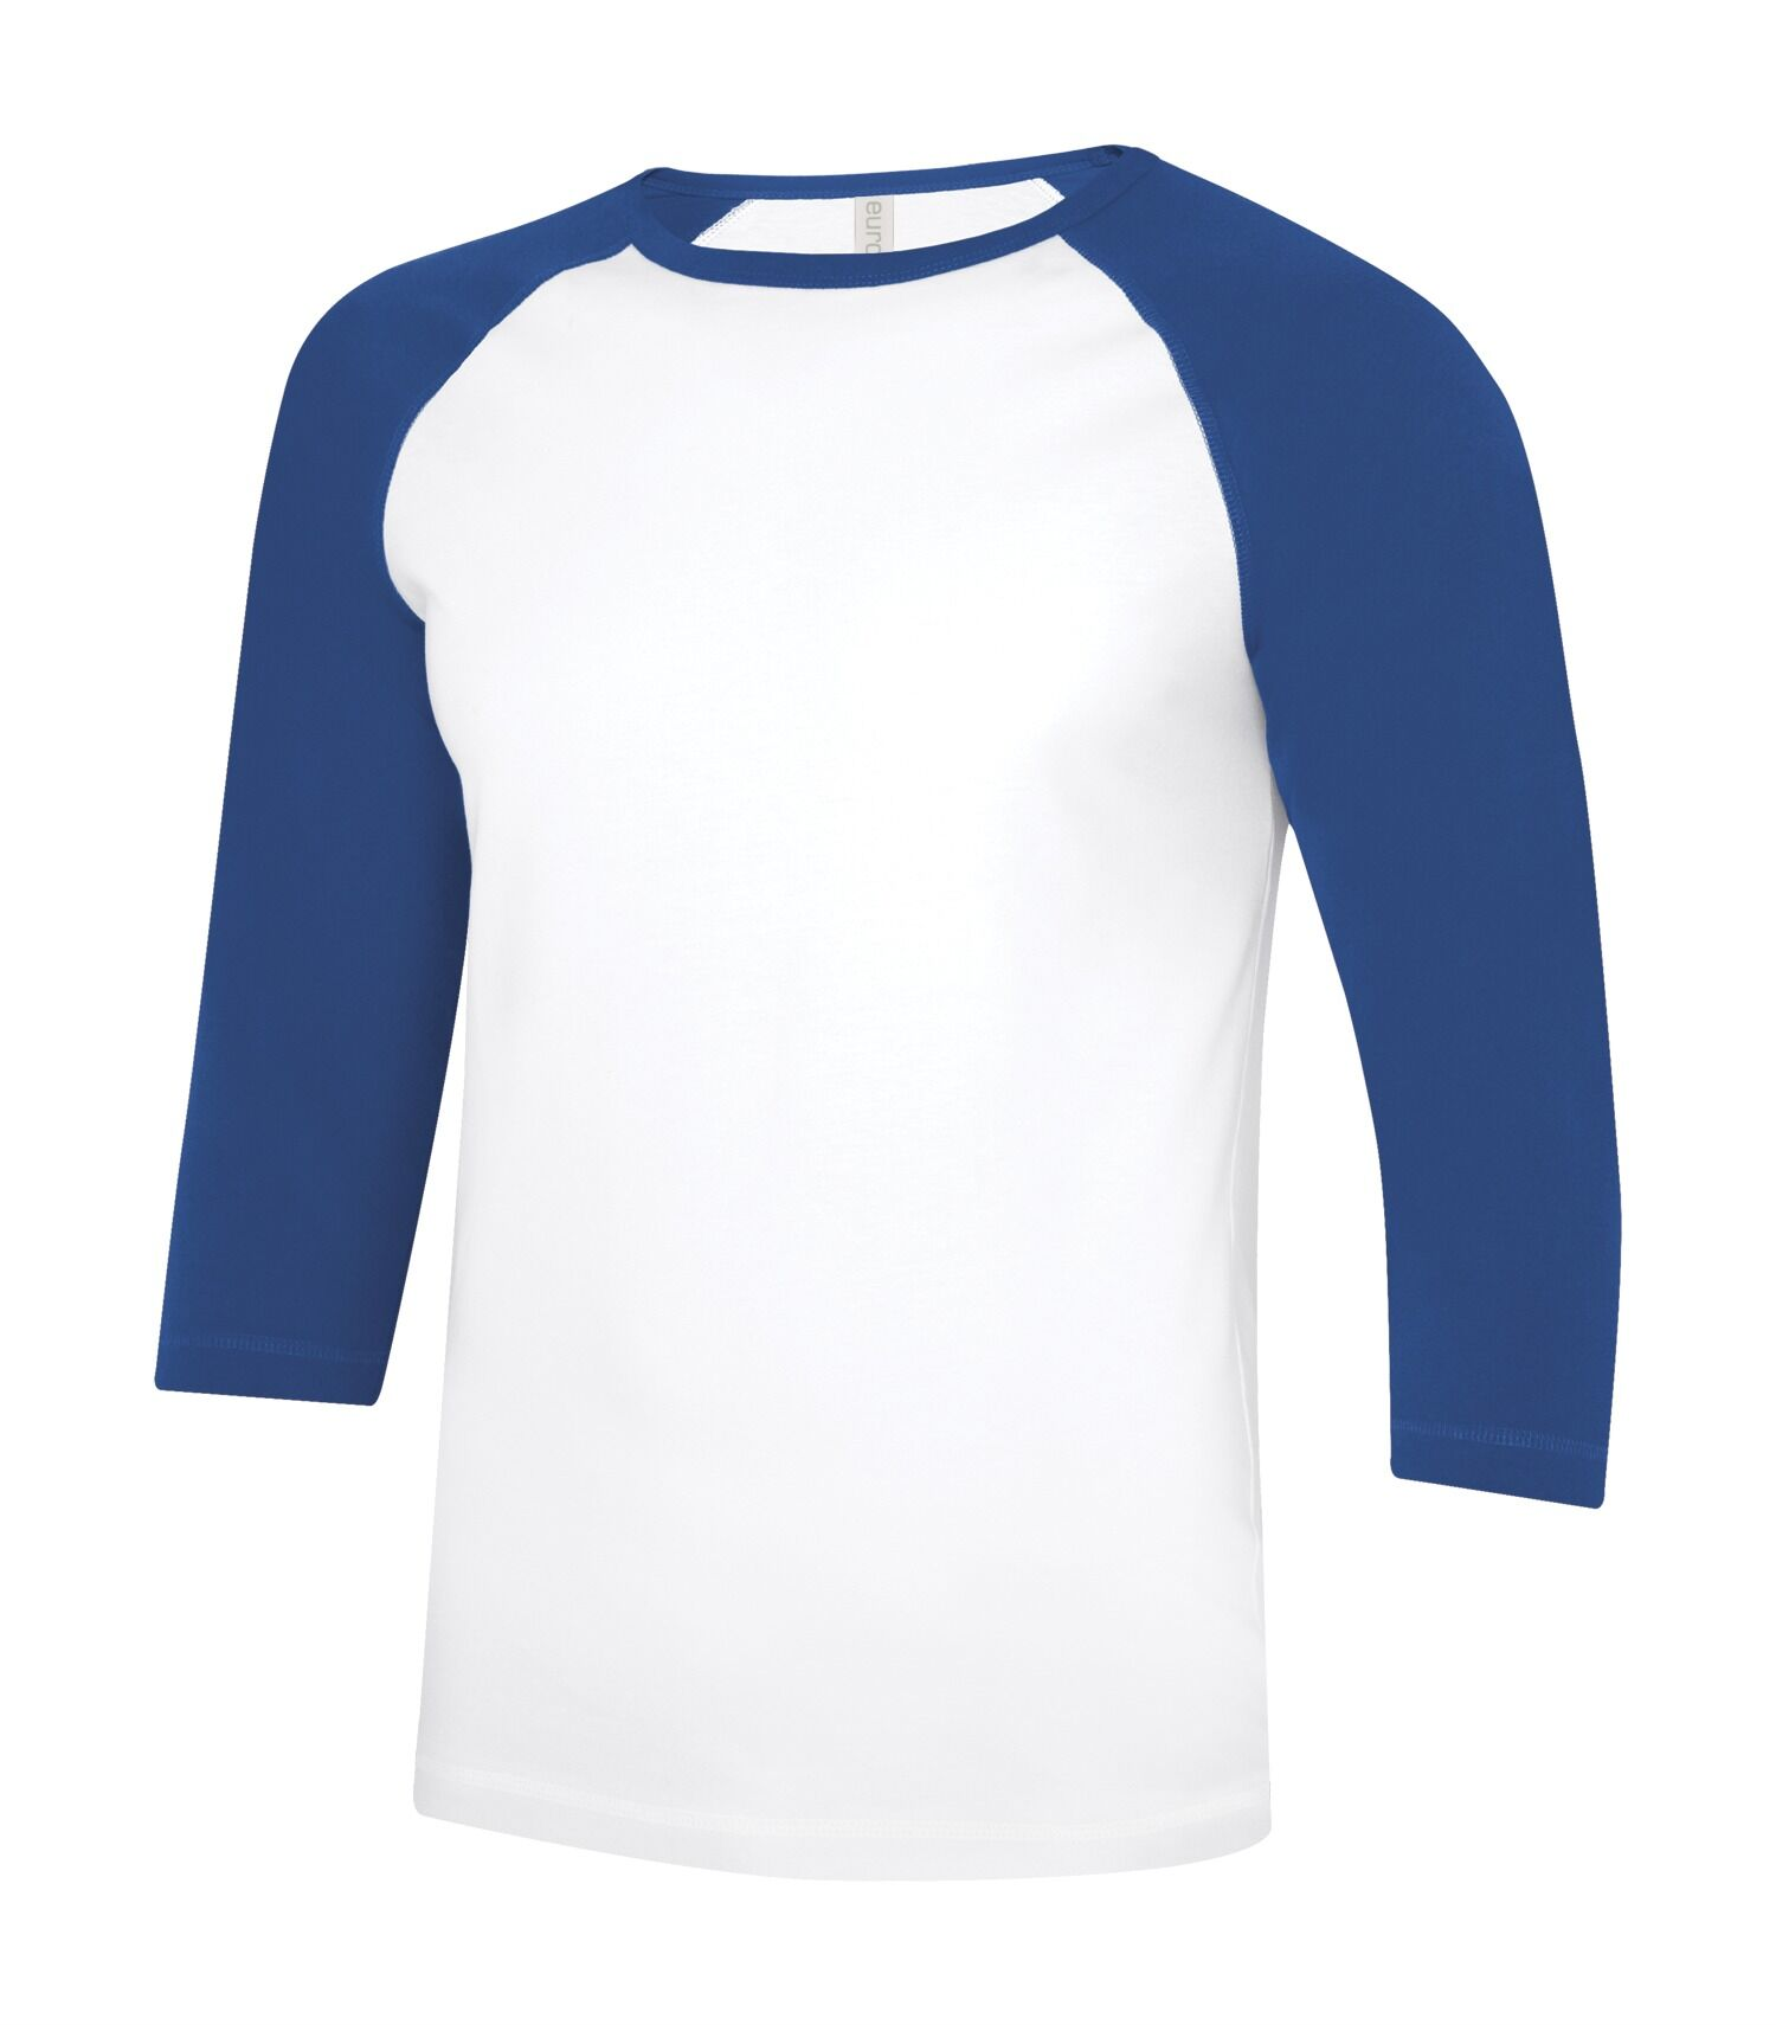 Adult Baseball Shirt - Cotton - ATC 0822